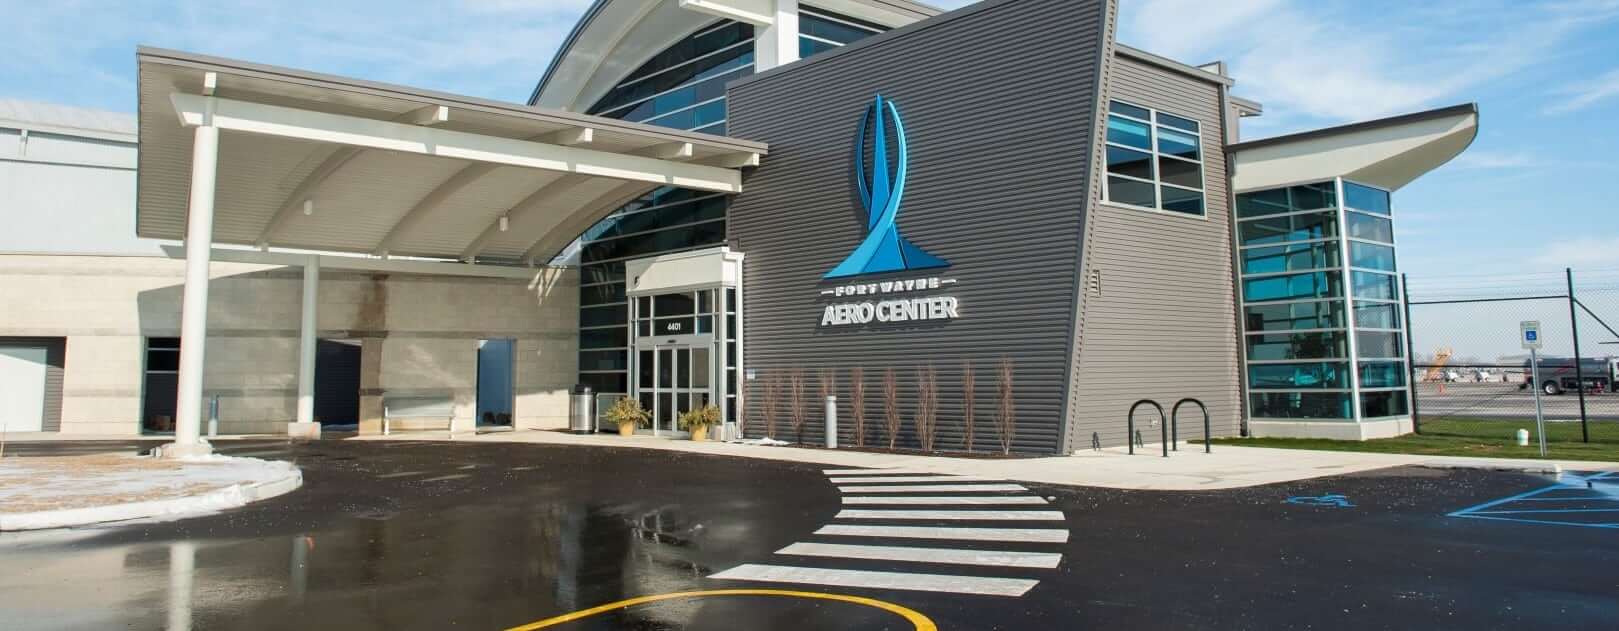 Fort Wayne Aero Center building